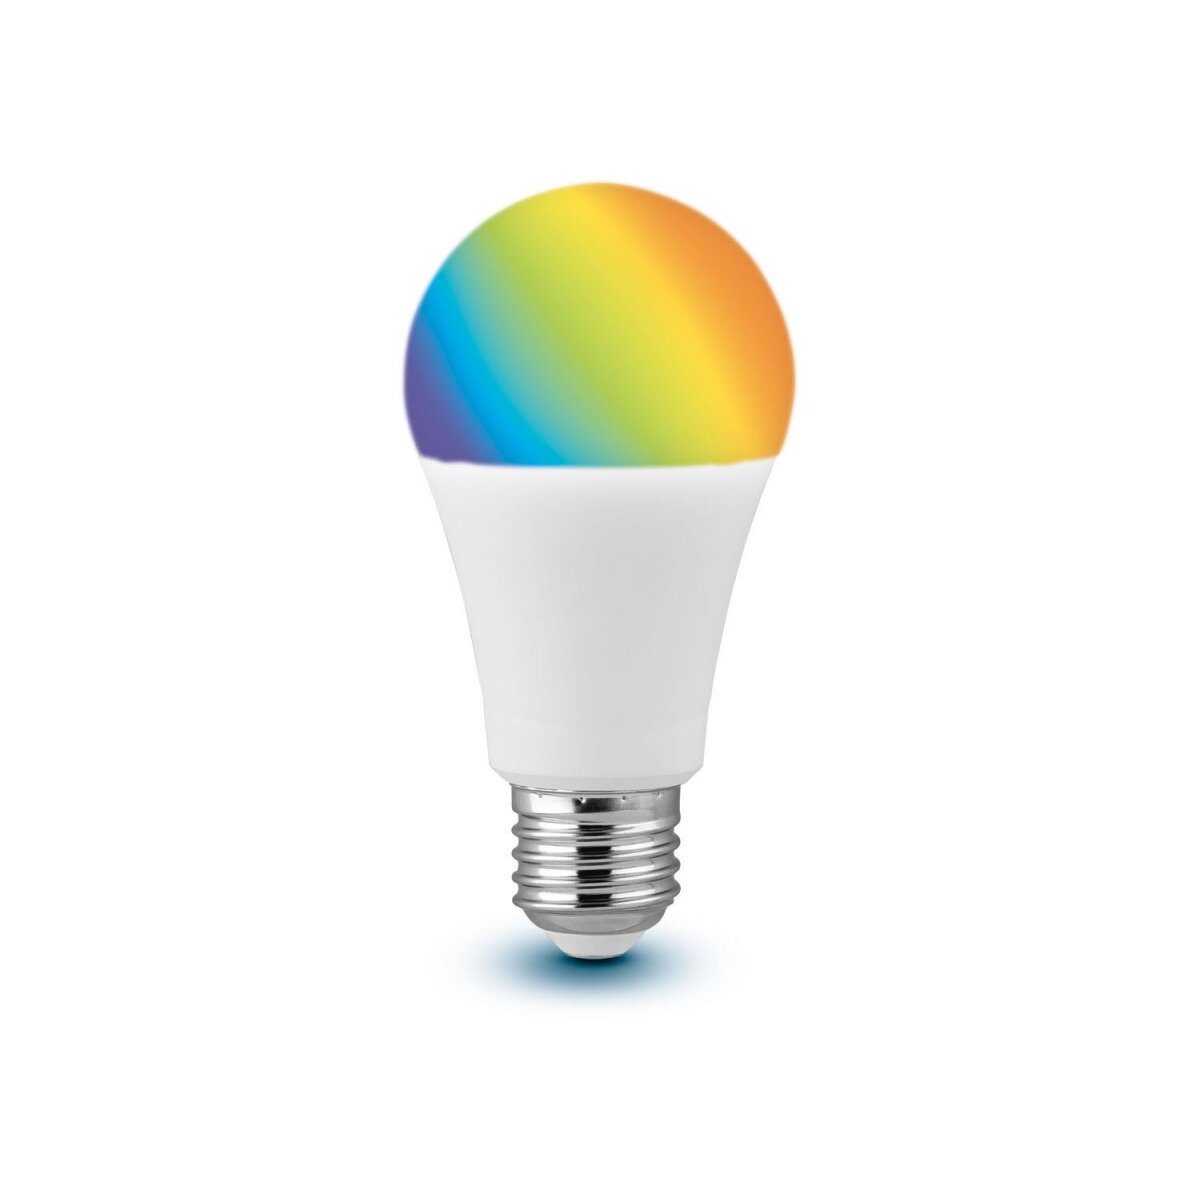 LIVARNO home Leuchtmittel RGB Zigbee Smart Home, Kugel - B-Ware sehr gut,  11,99 €